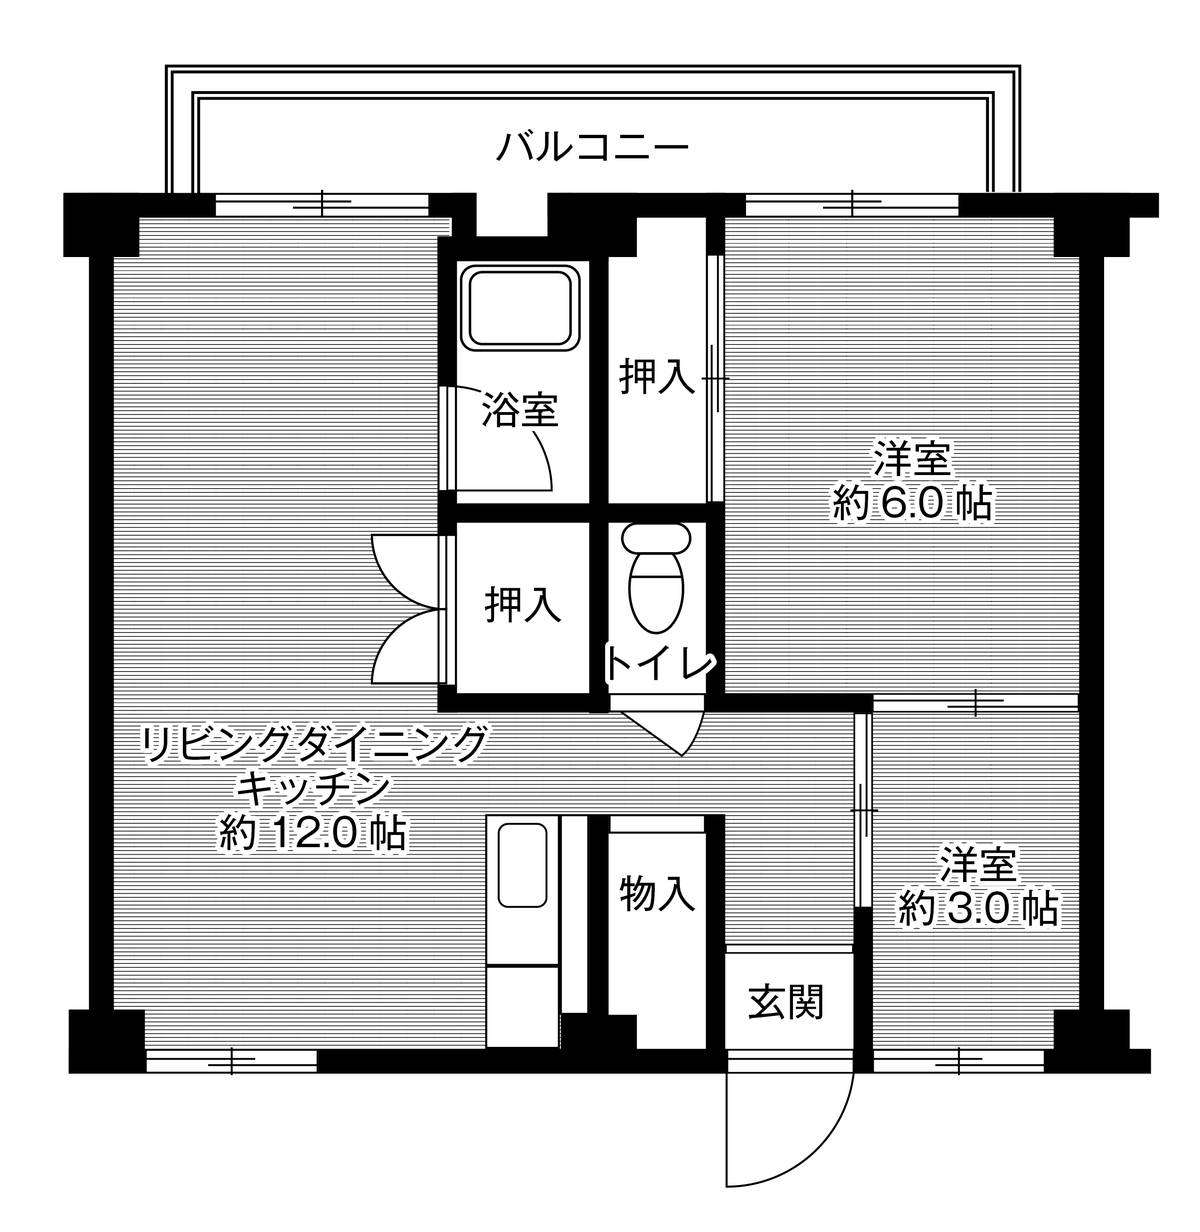 3DK floorplan of Village House Higashi Futami in Akashi-shi